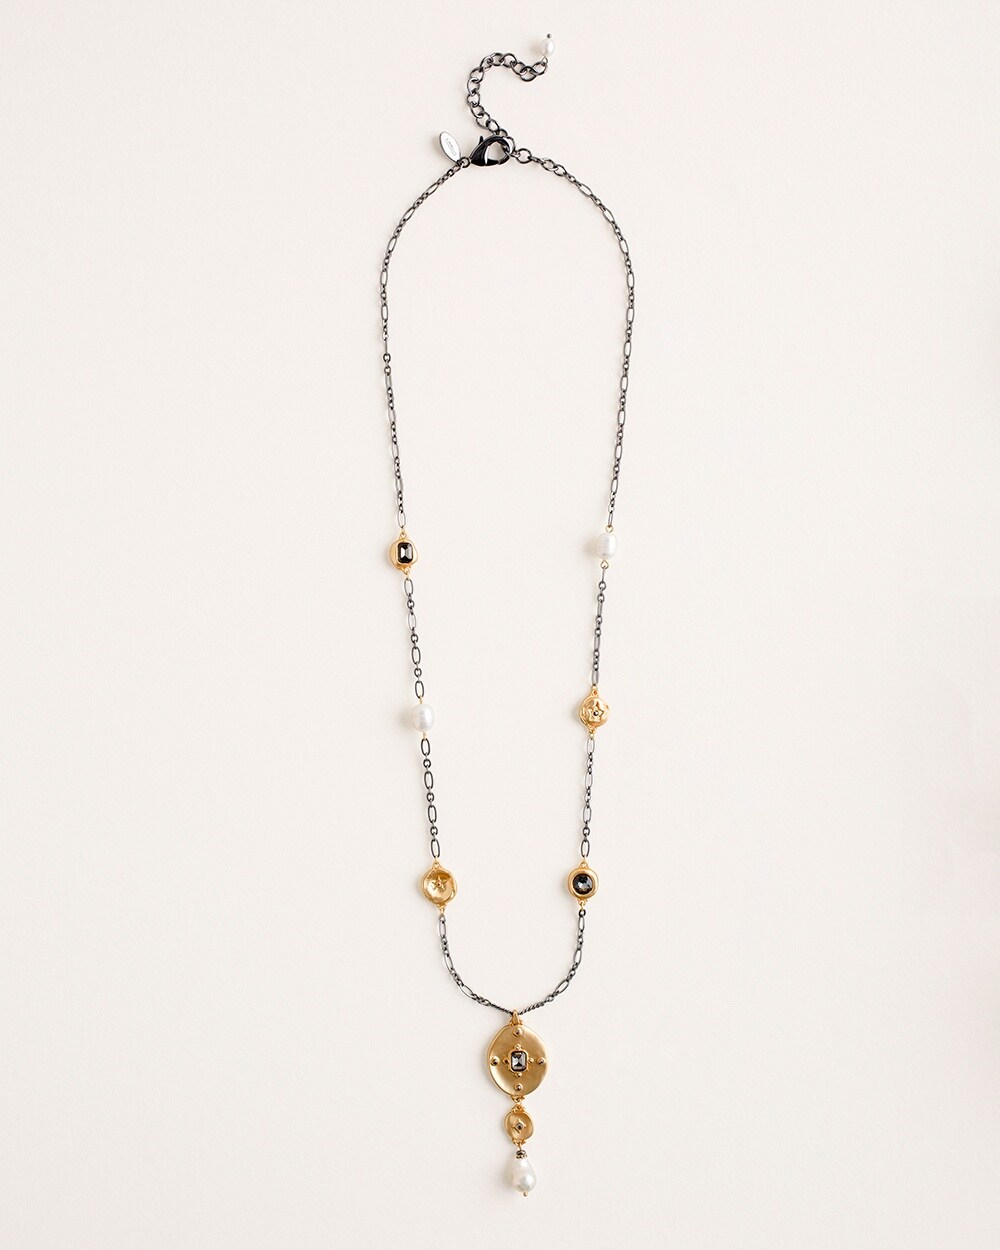 Black and Goldtone Pendant Necklace